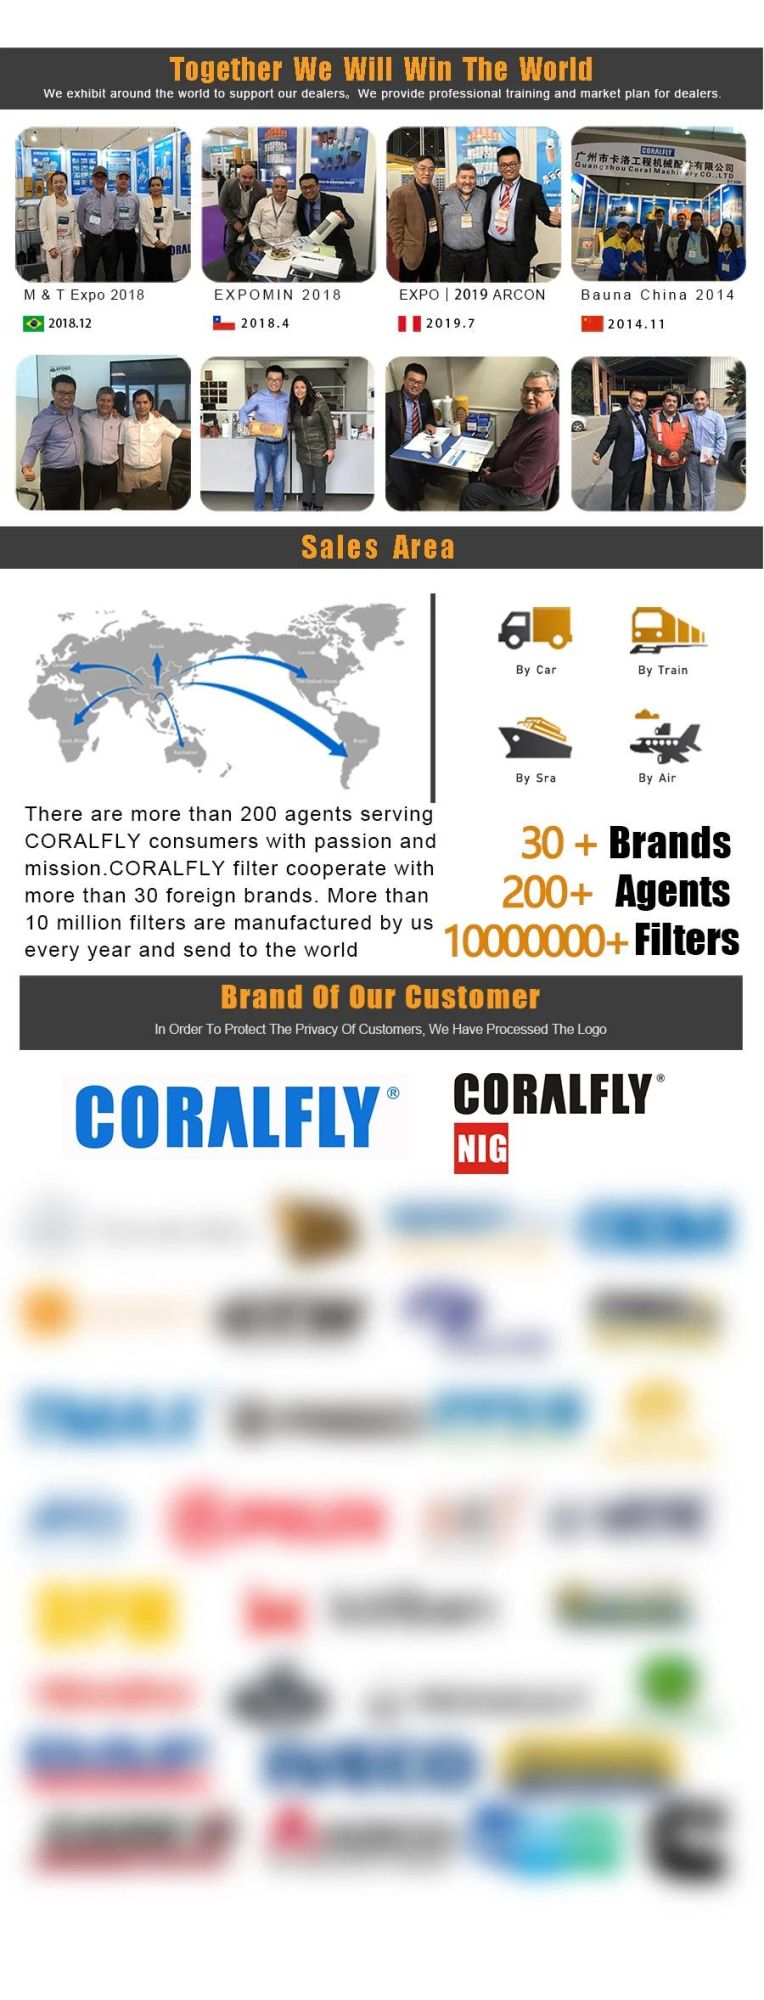 Coralfly Air Filter 3214623900 Af26147 PA4876 for Wix Atlas Copco Fleetguard Baldwin